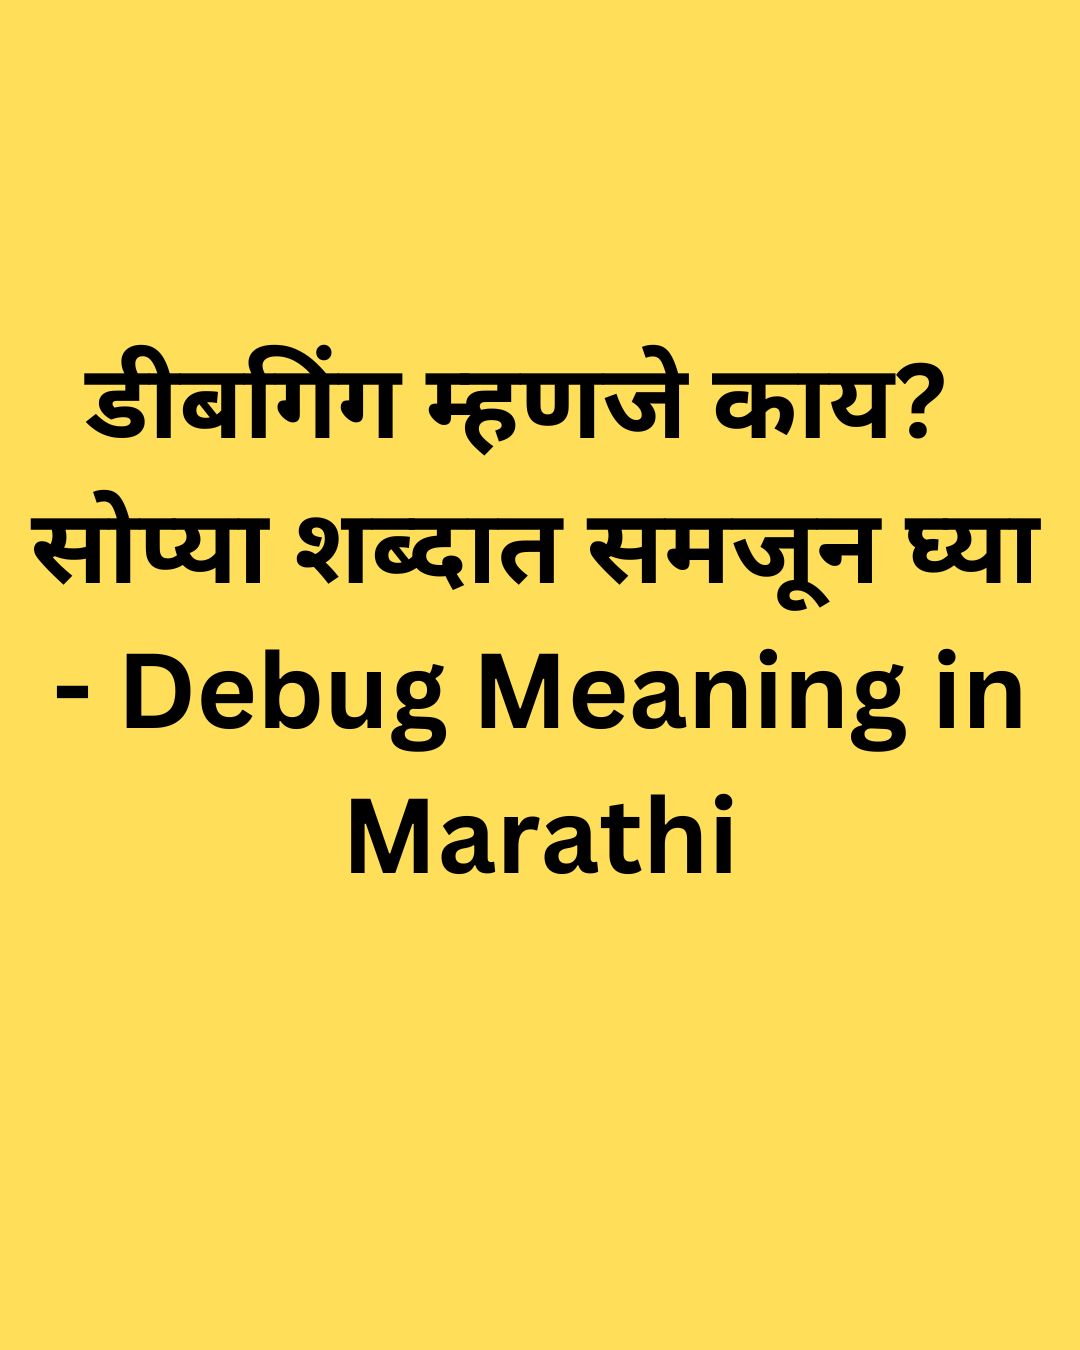 Debug Meaning in Marathi